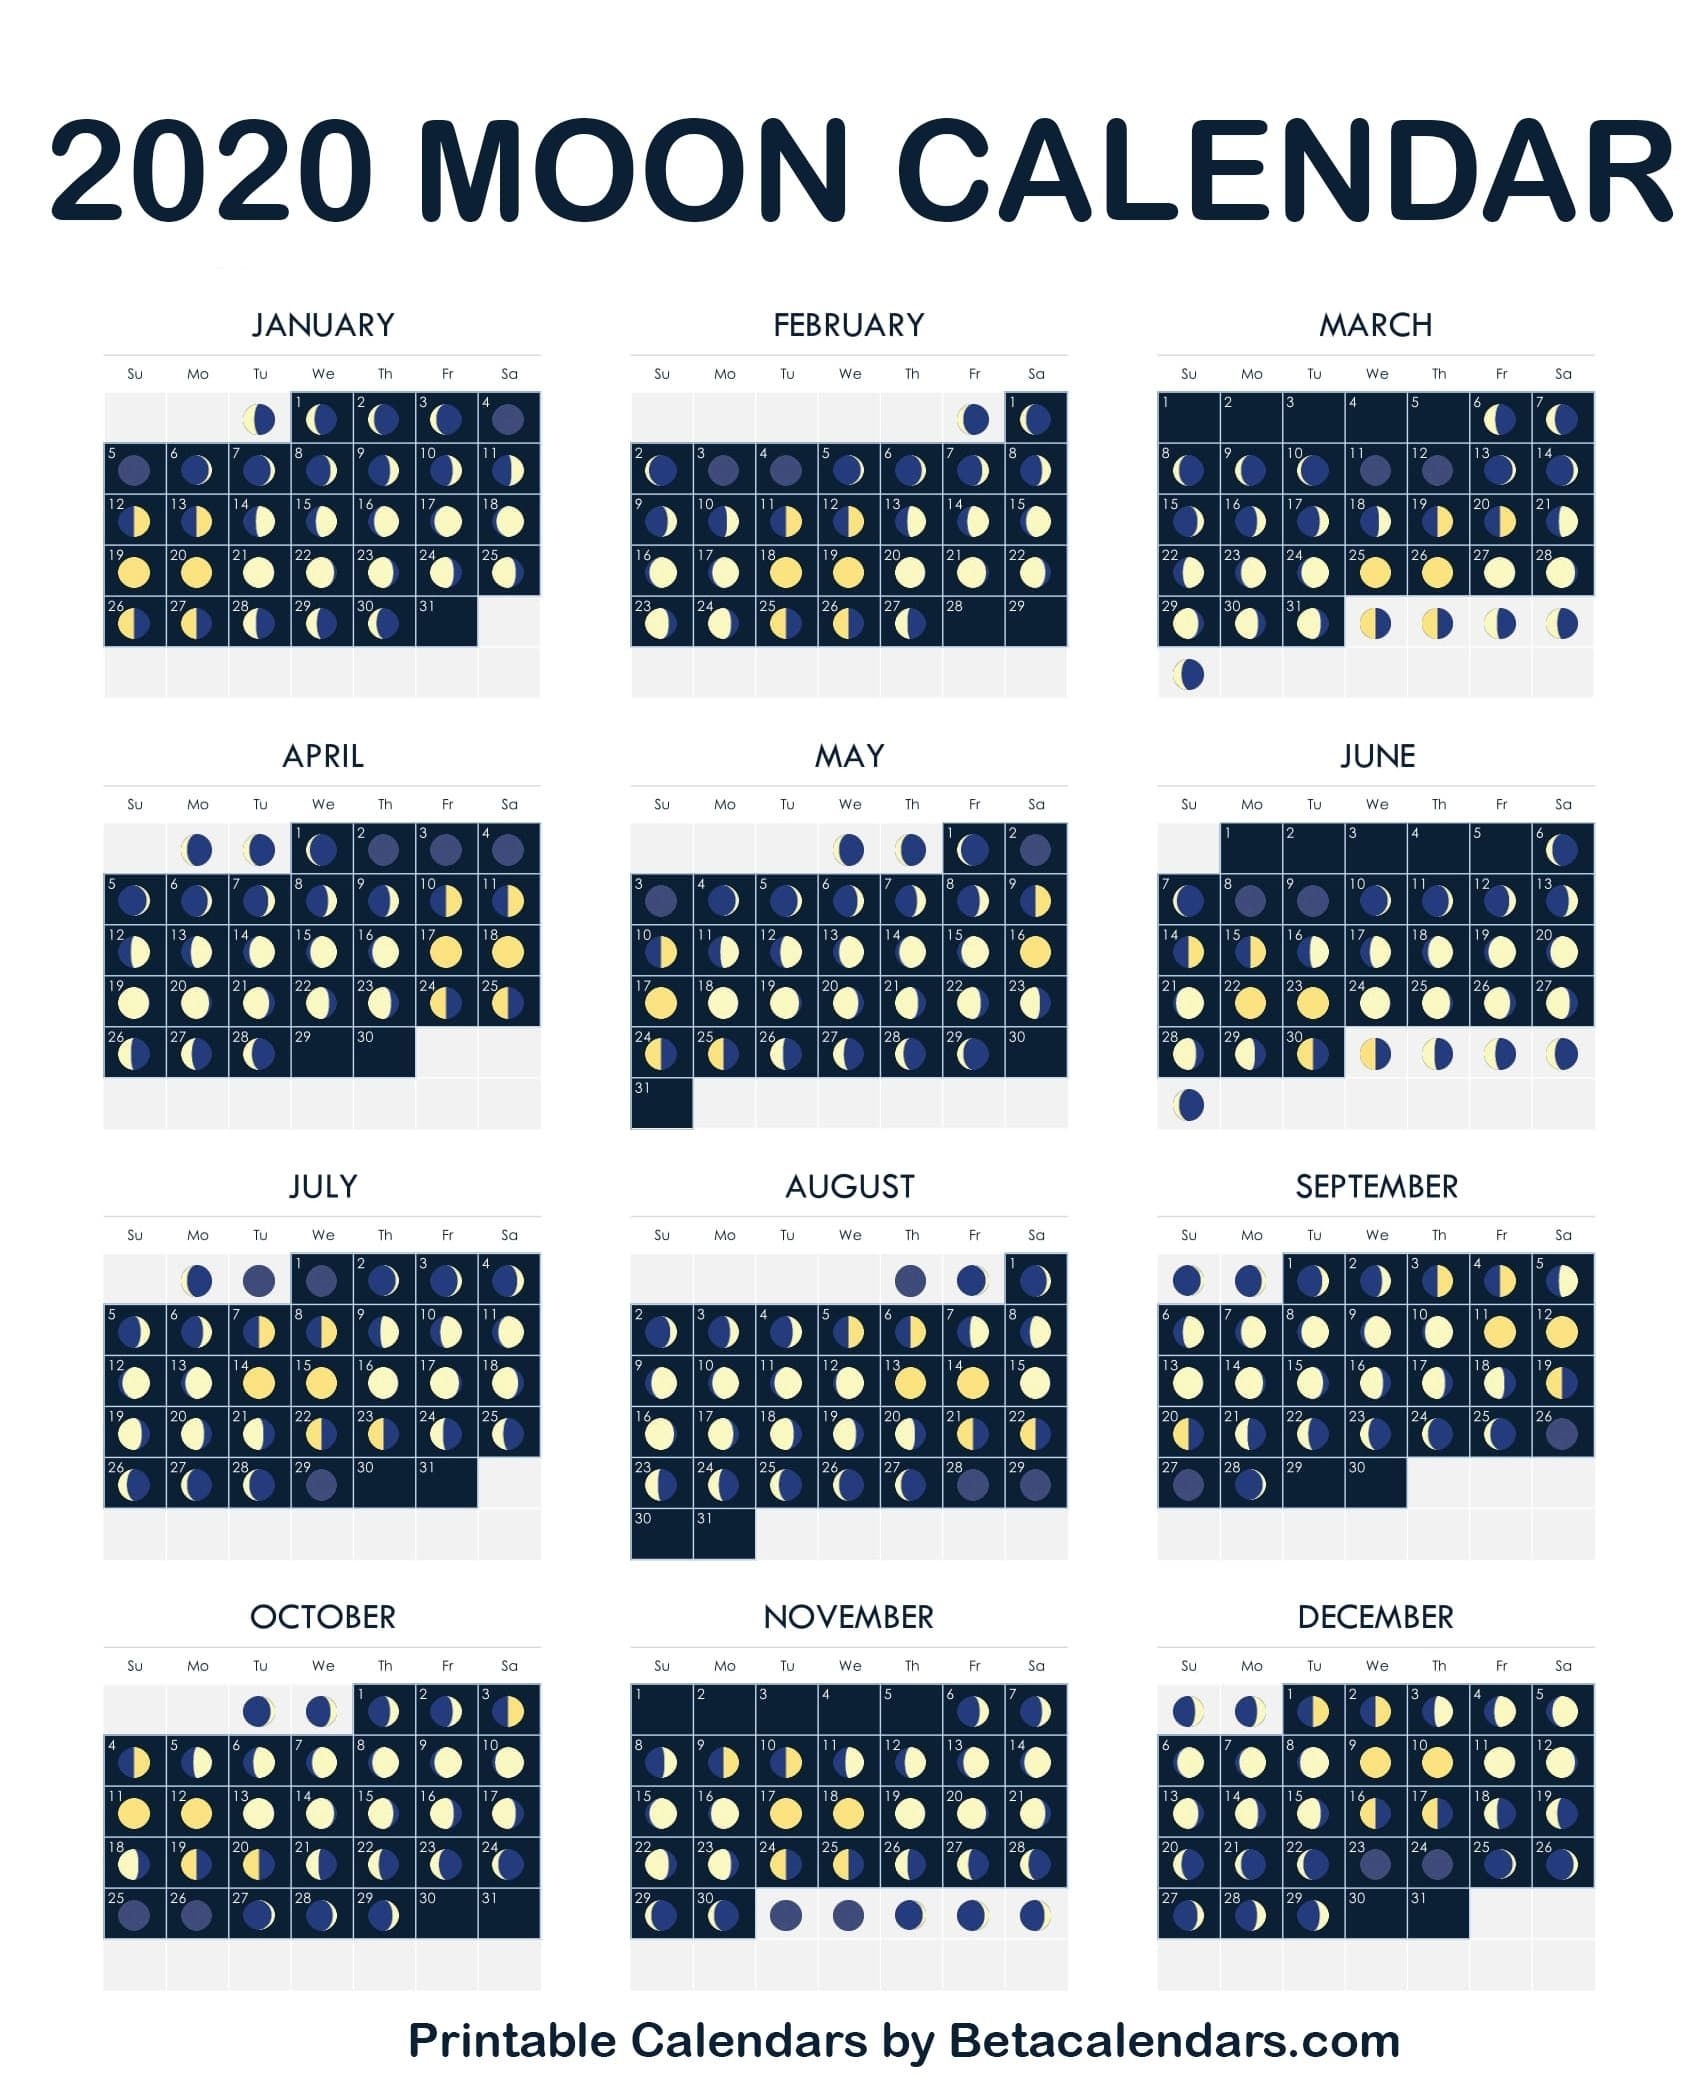 2020 Calendar - Free Printable Yearly Calendar 2020 | Moon